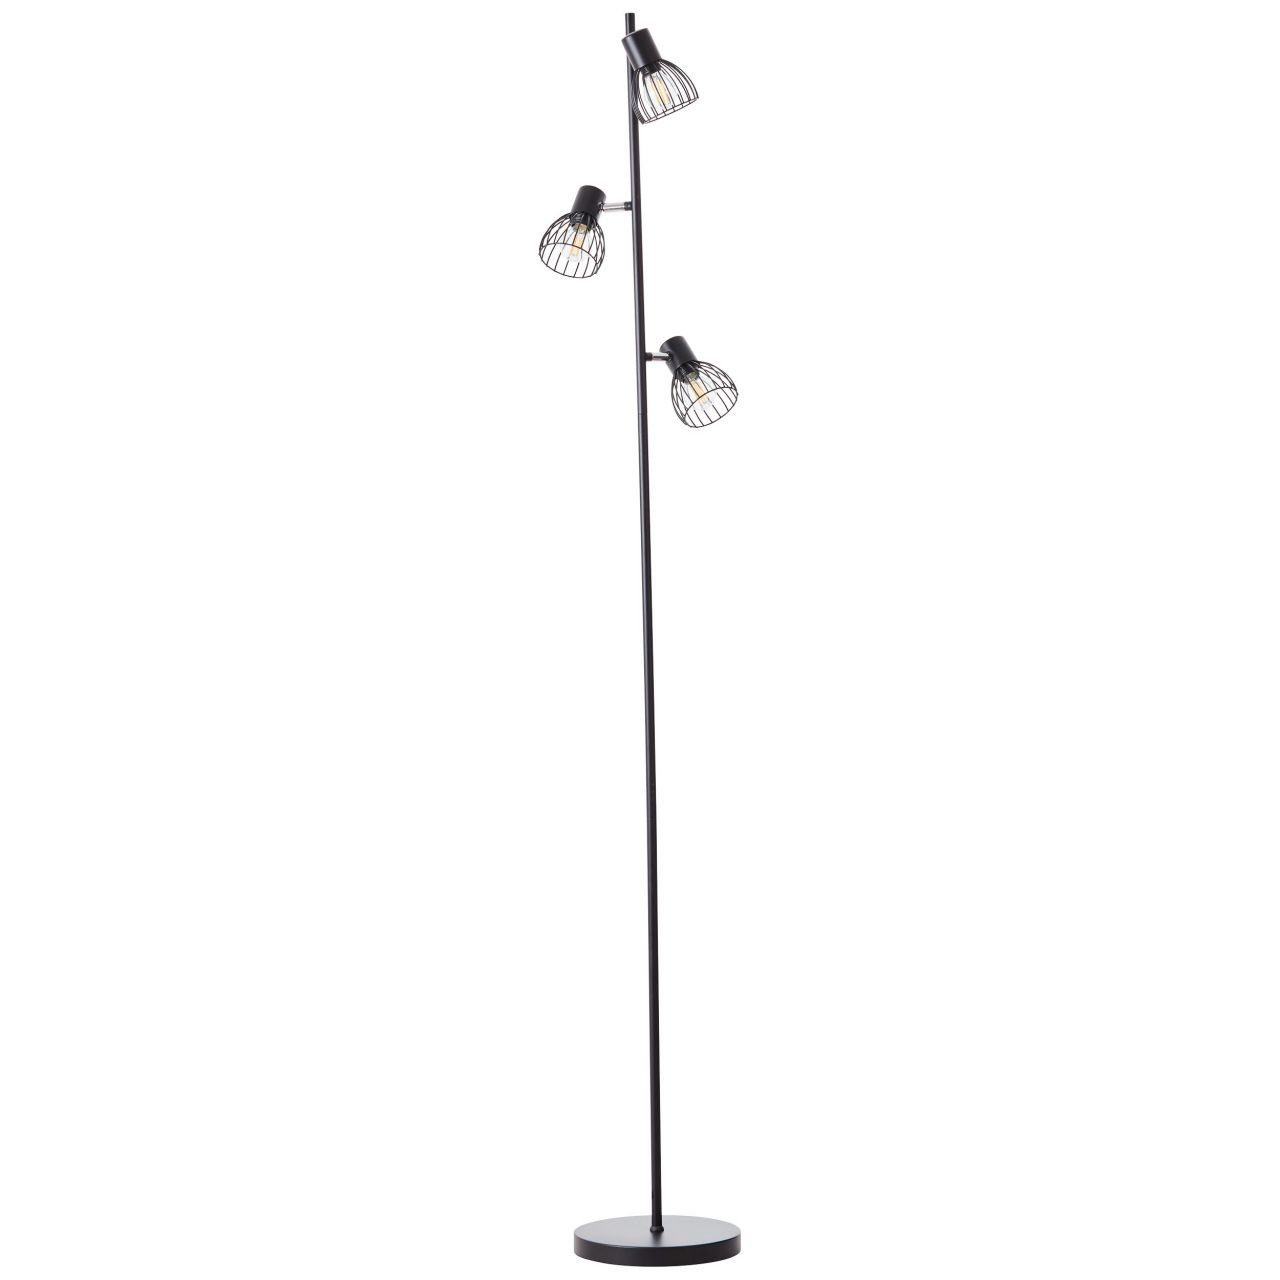 Brilliant Stehlampe Blacky, 3x Lampe, E14, Blacky 25W, Standleuchte Mit D45, schwarz 3flg matt, Fu